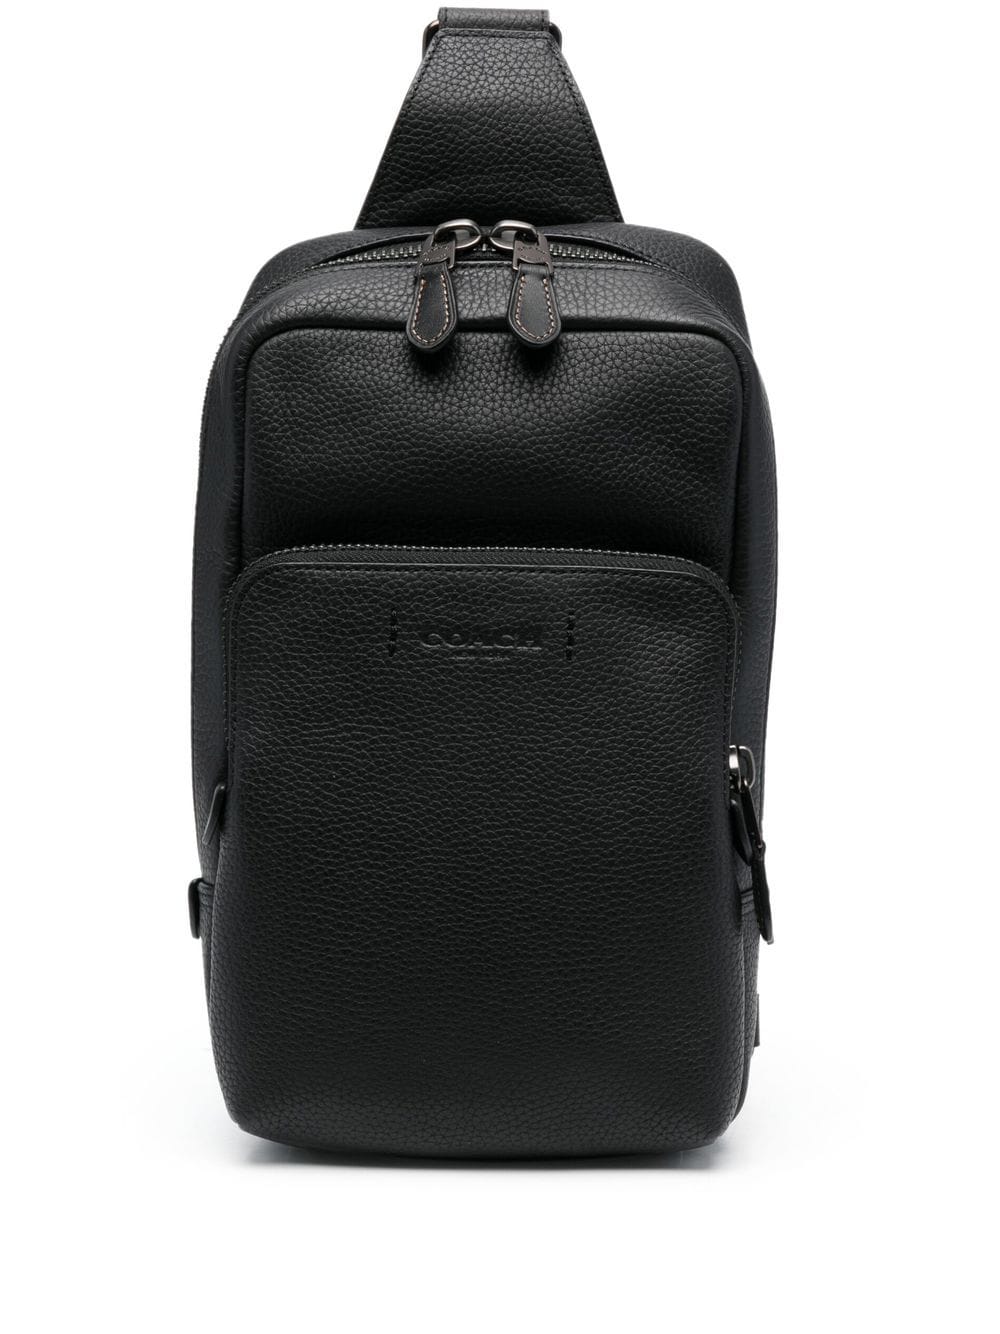 Gotham leather backpack